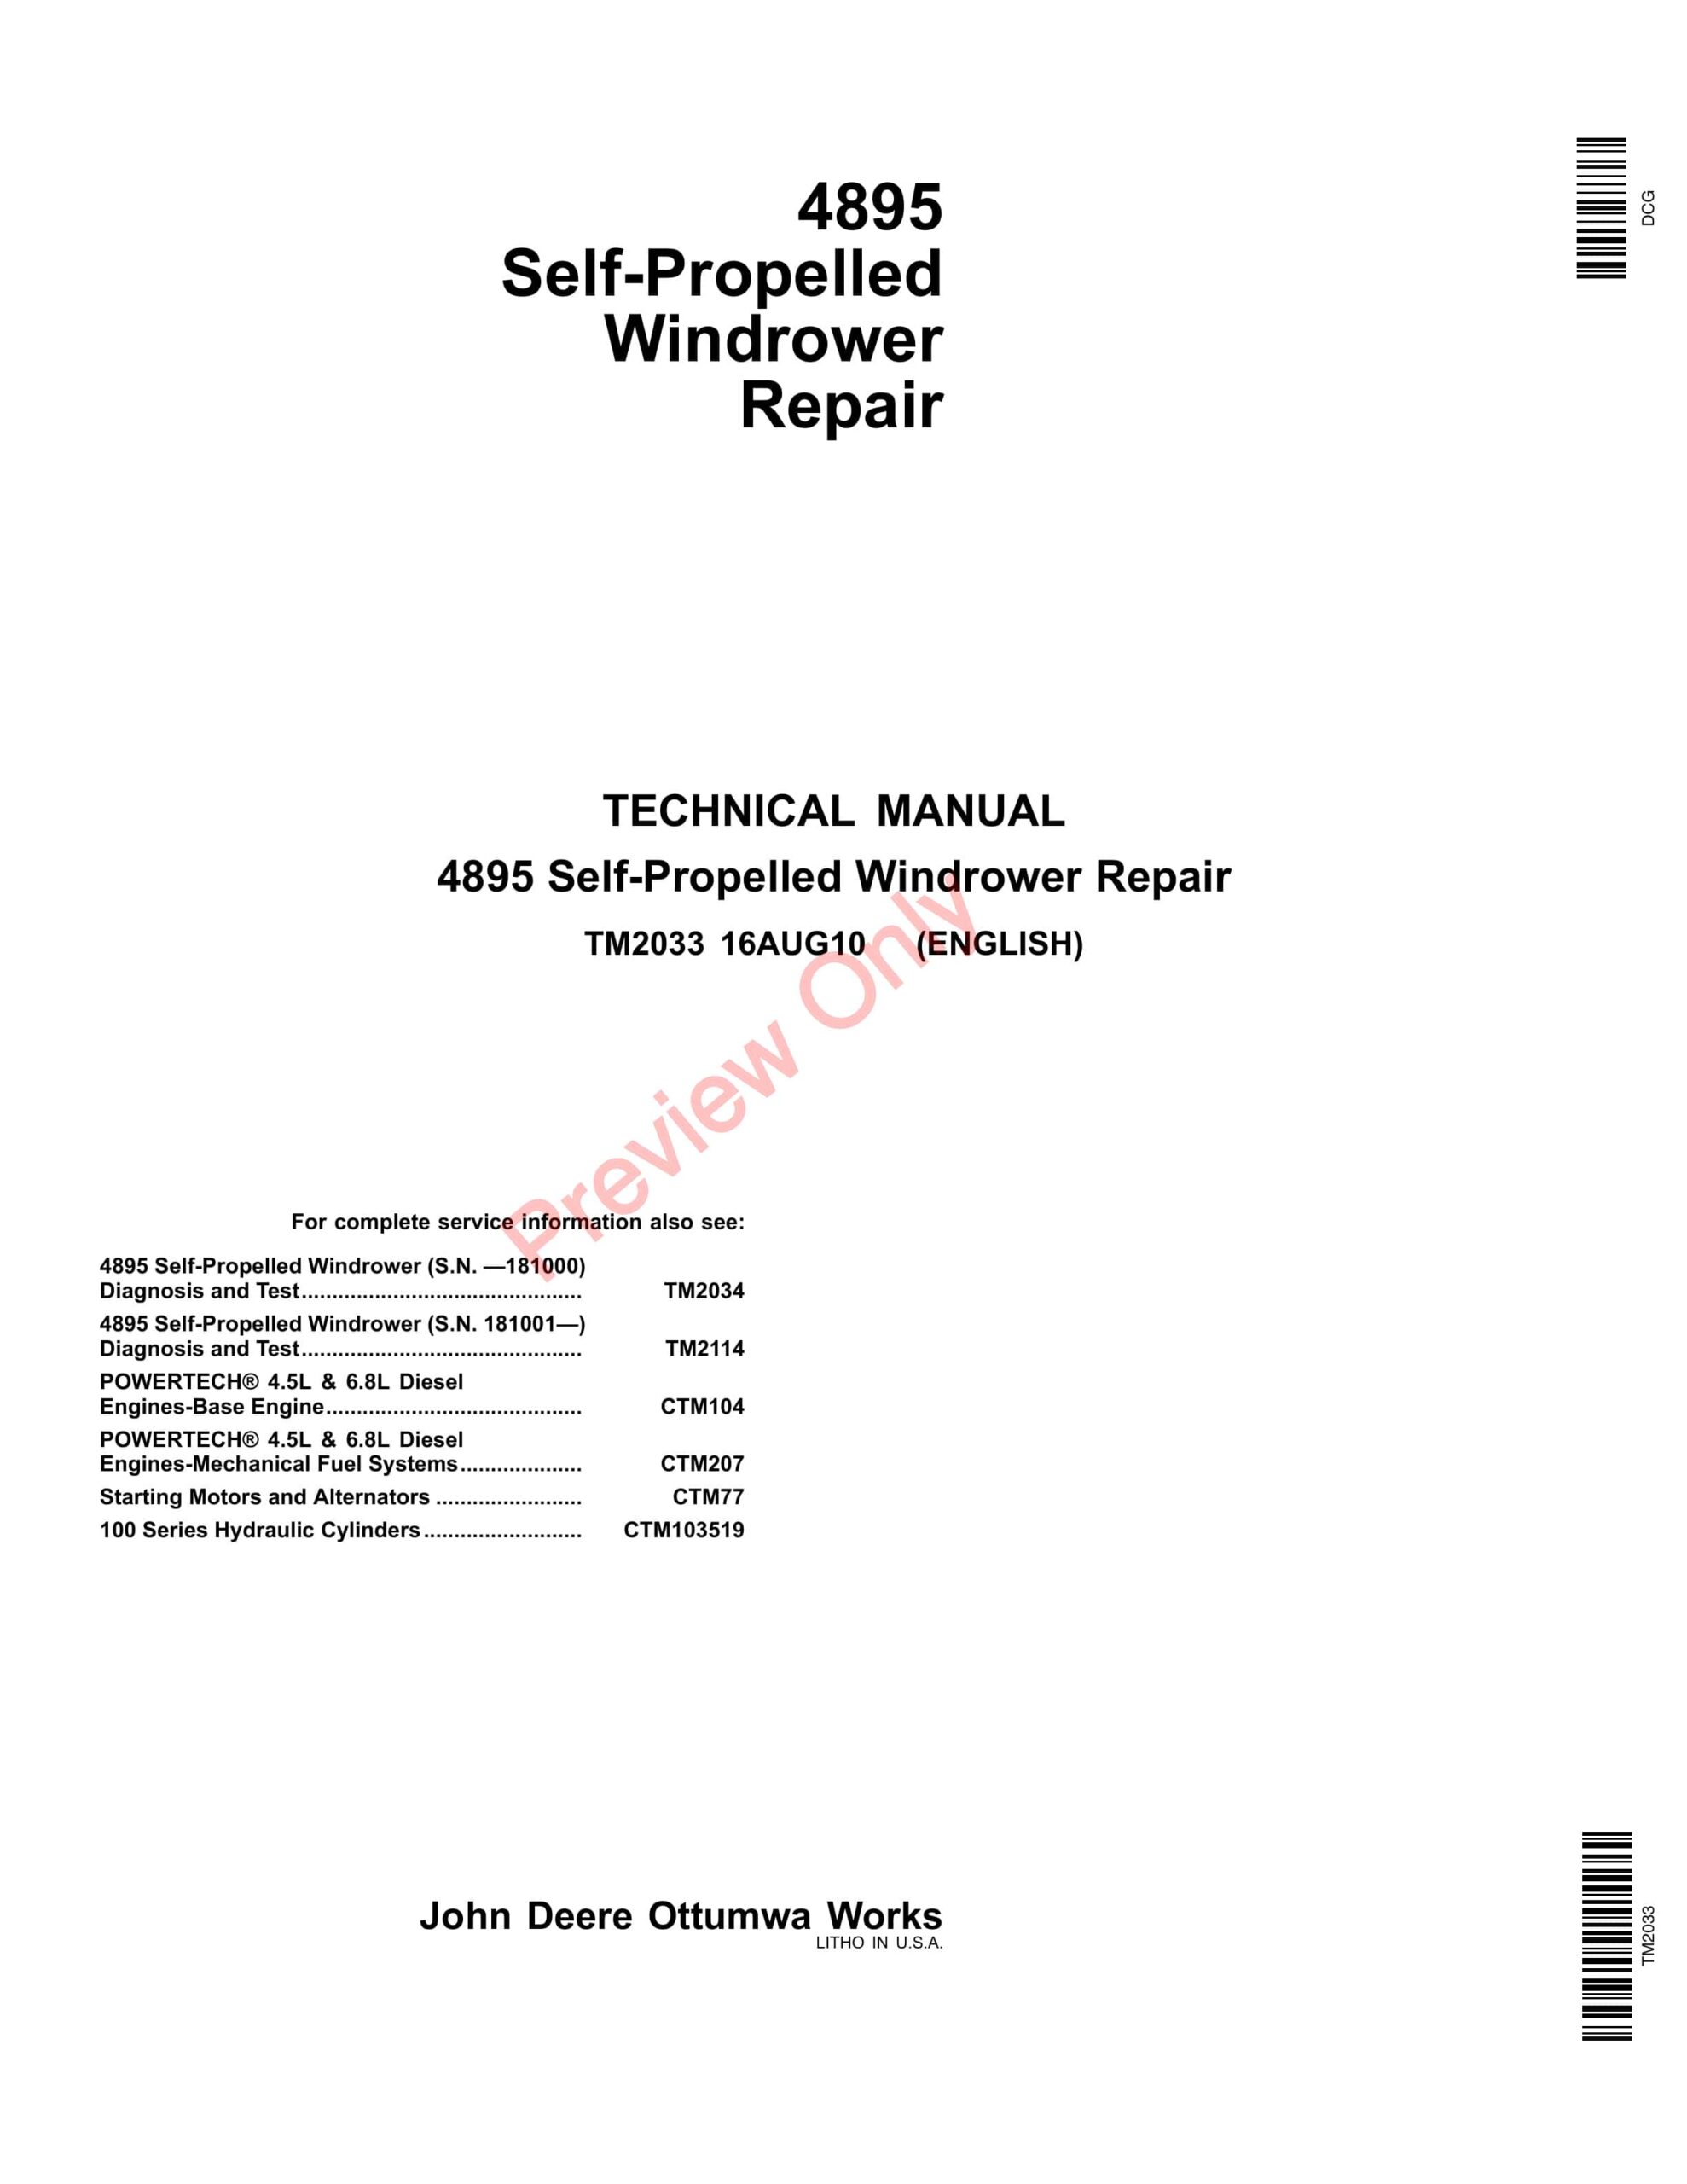 John Deere 4895 Self-Propelled Windrower Technical Manual TM2033 16AUG10-1